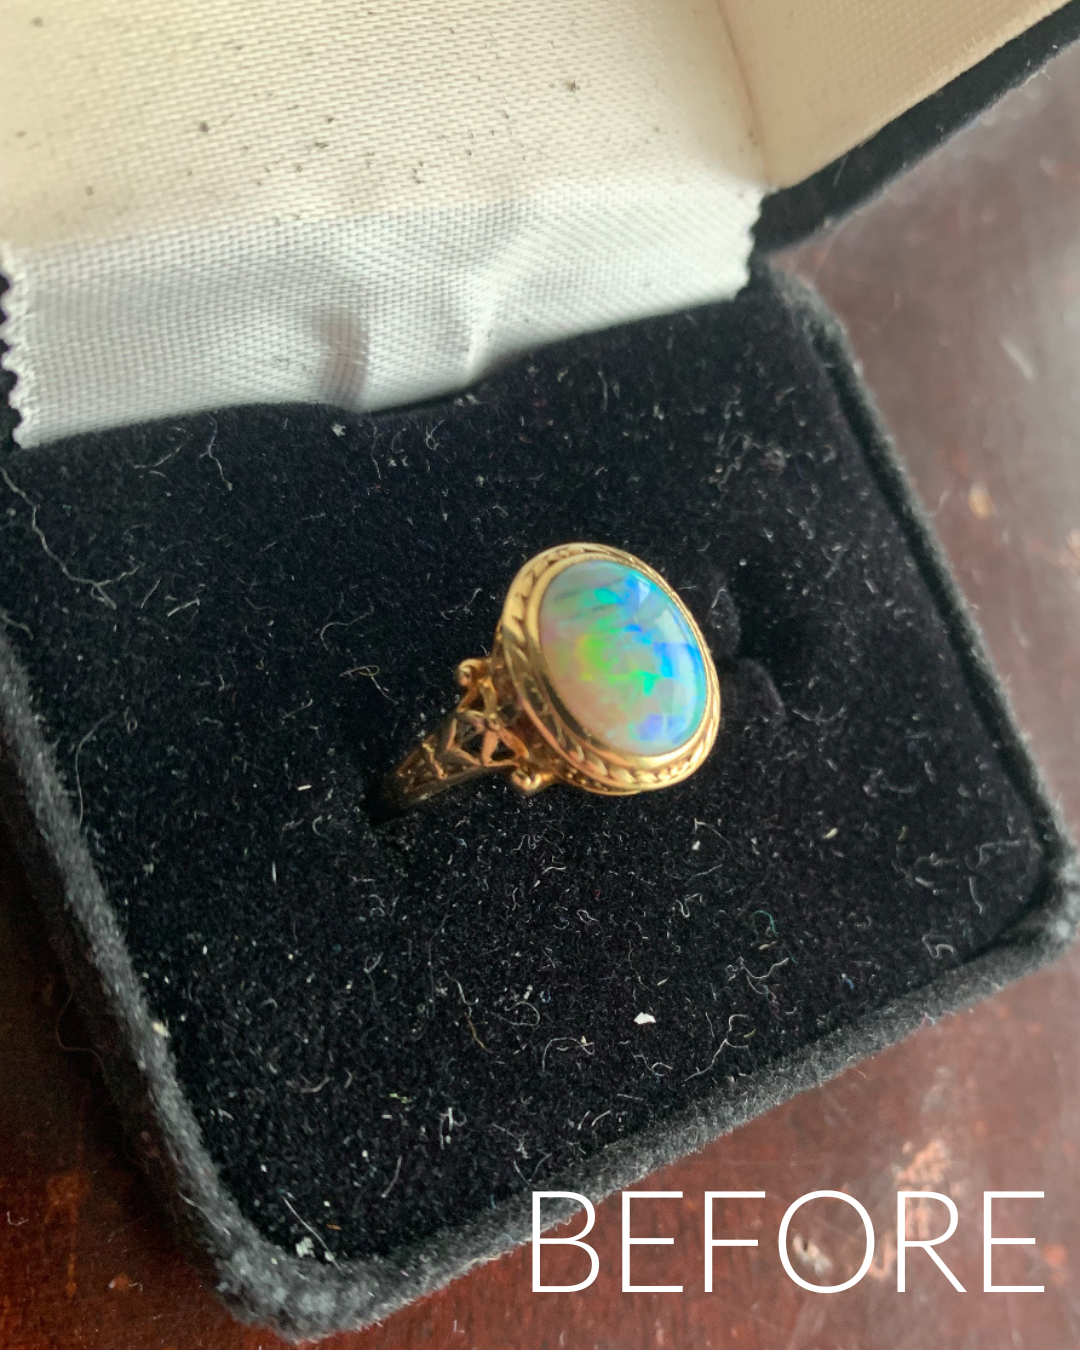 Repair: Make ring into pendant & add chain